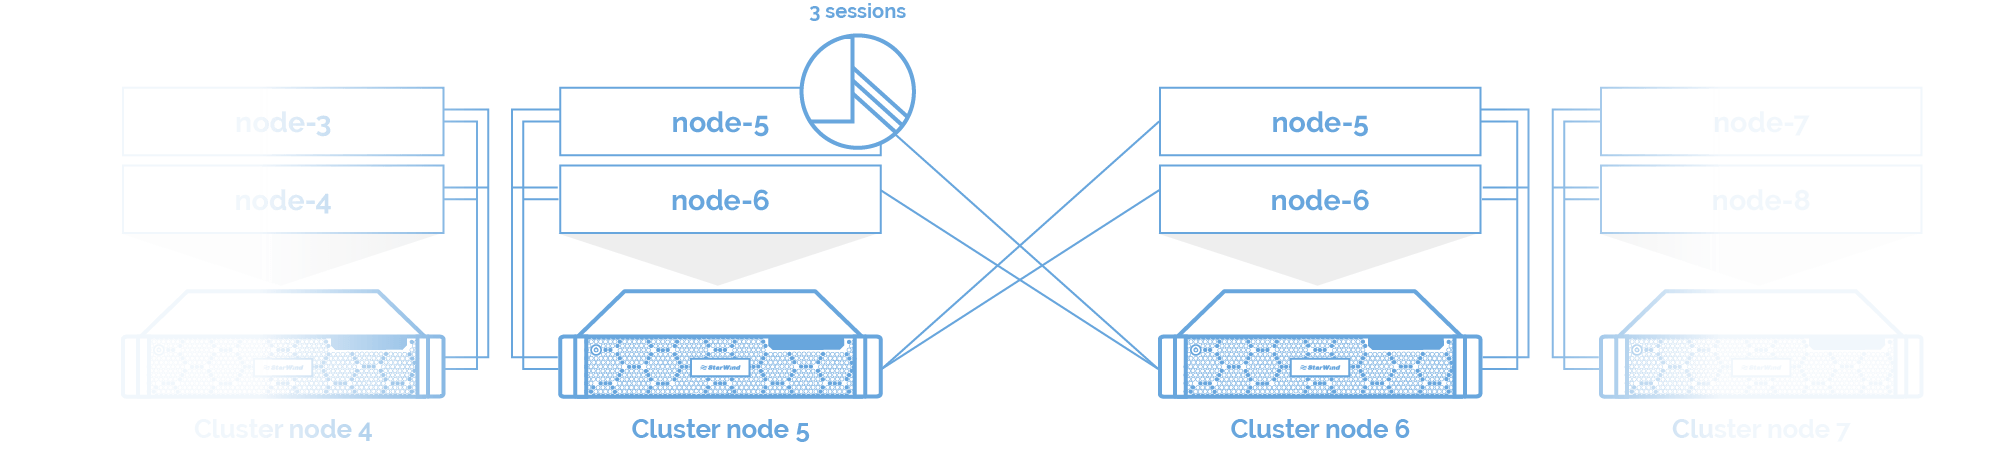 iSCSI sessions interconnection diagram